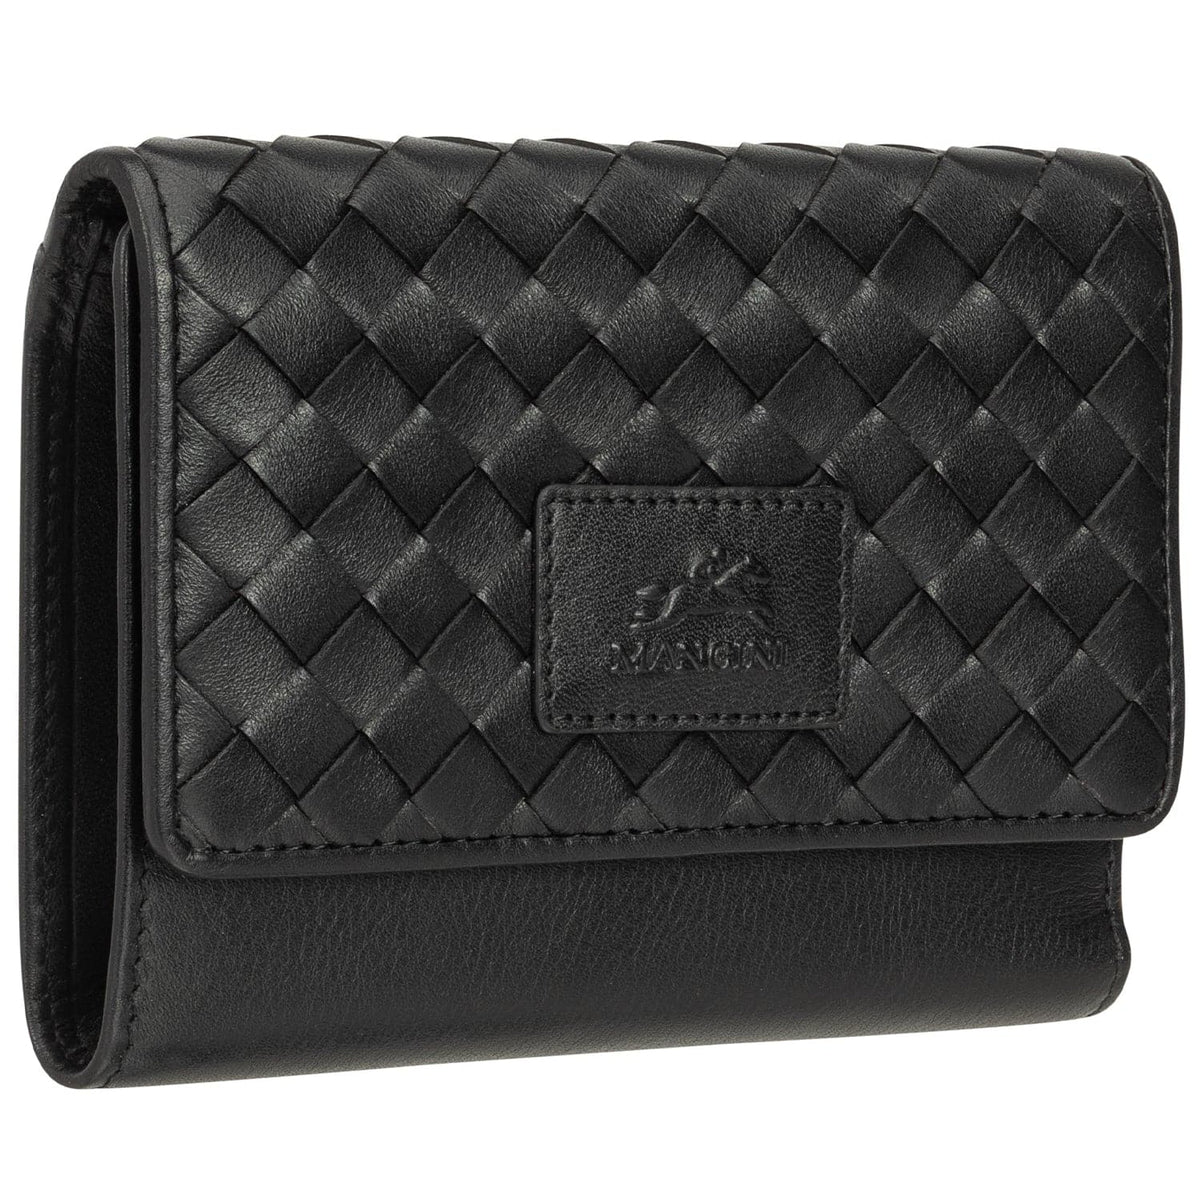 Mancini Women's Basket Weave RFID Secure Medium Clutch Wallet